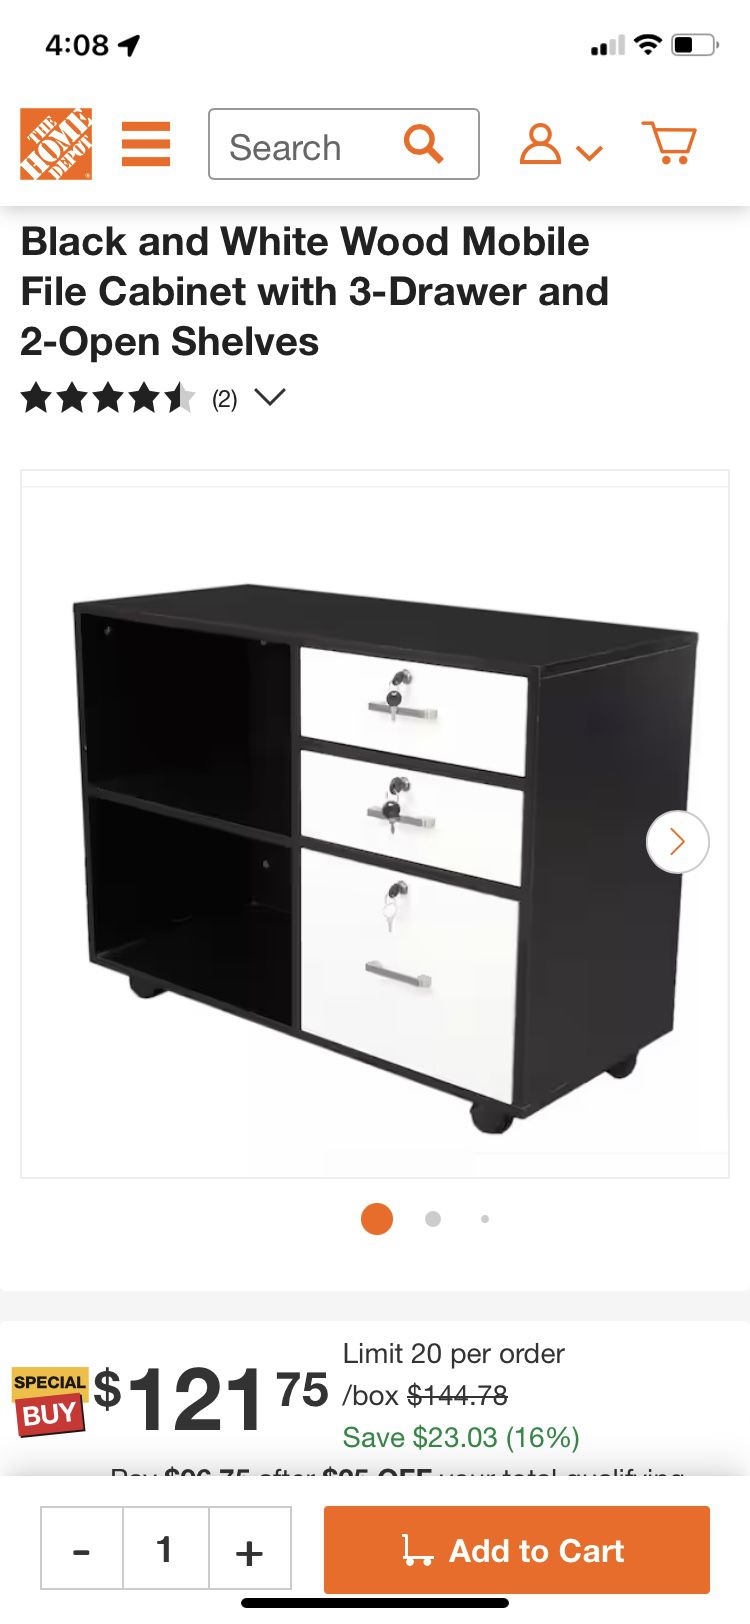 3-Drawer File Cabinet $69.99